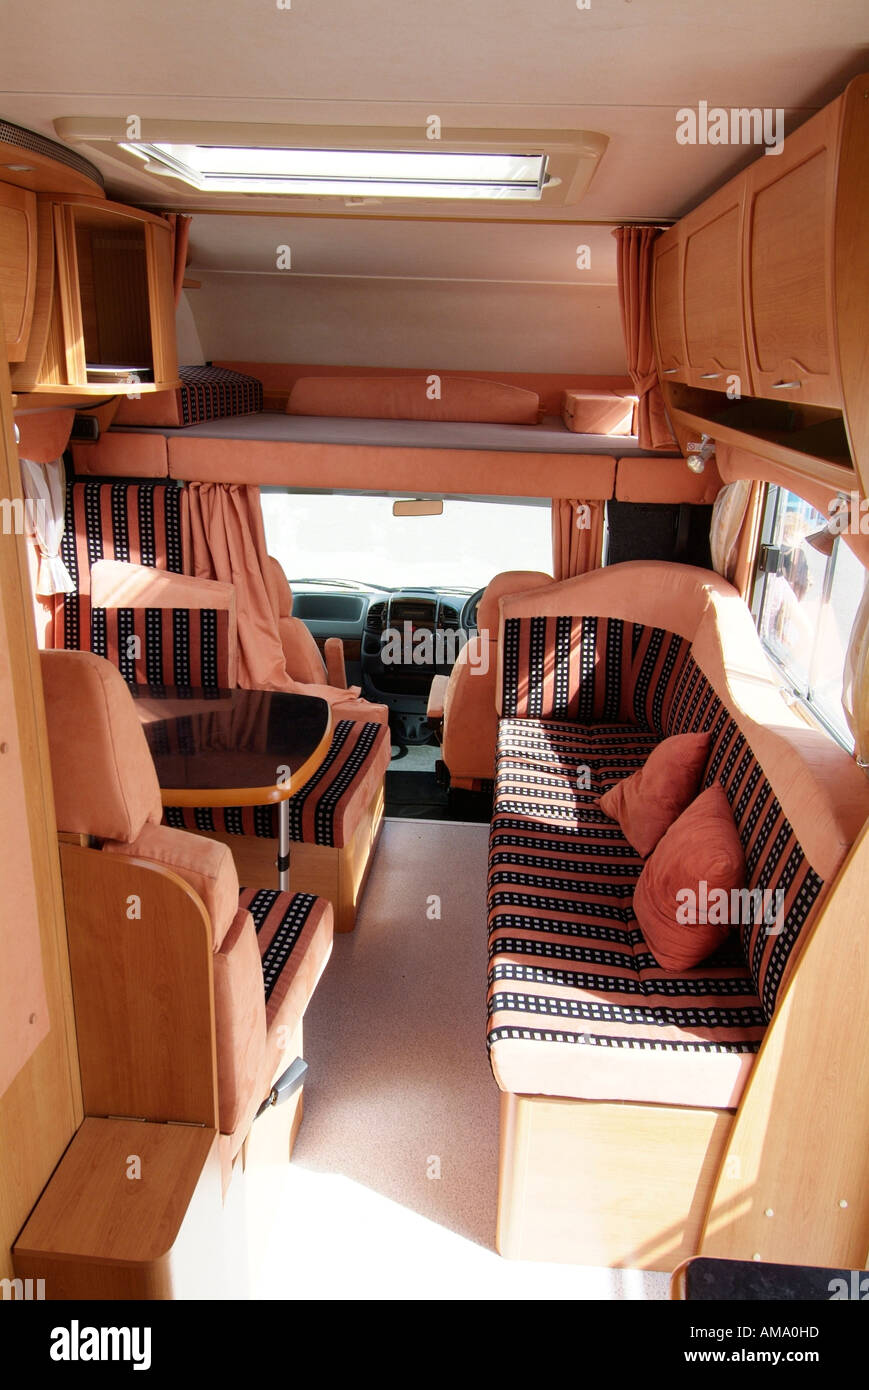 Motor home interior camper van transport vehicle leisure Hymer compact travel motor caravan Stock Photo